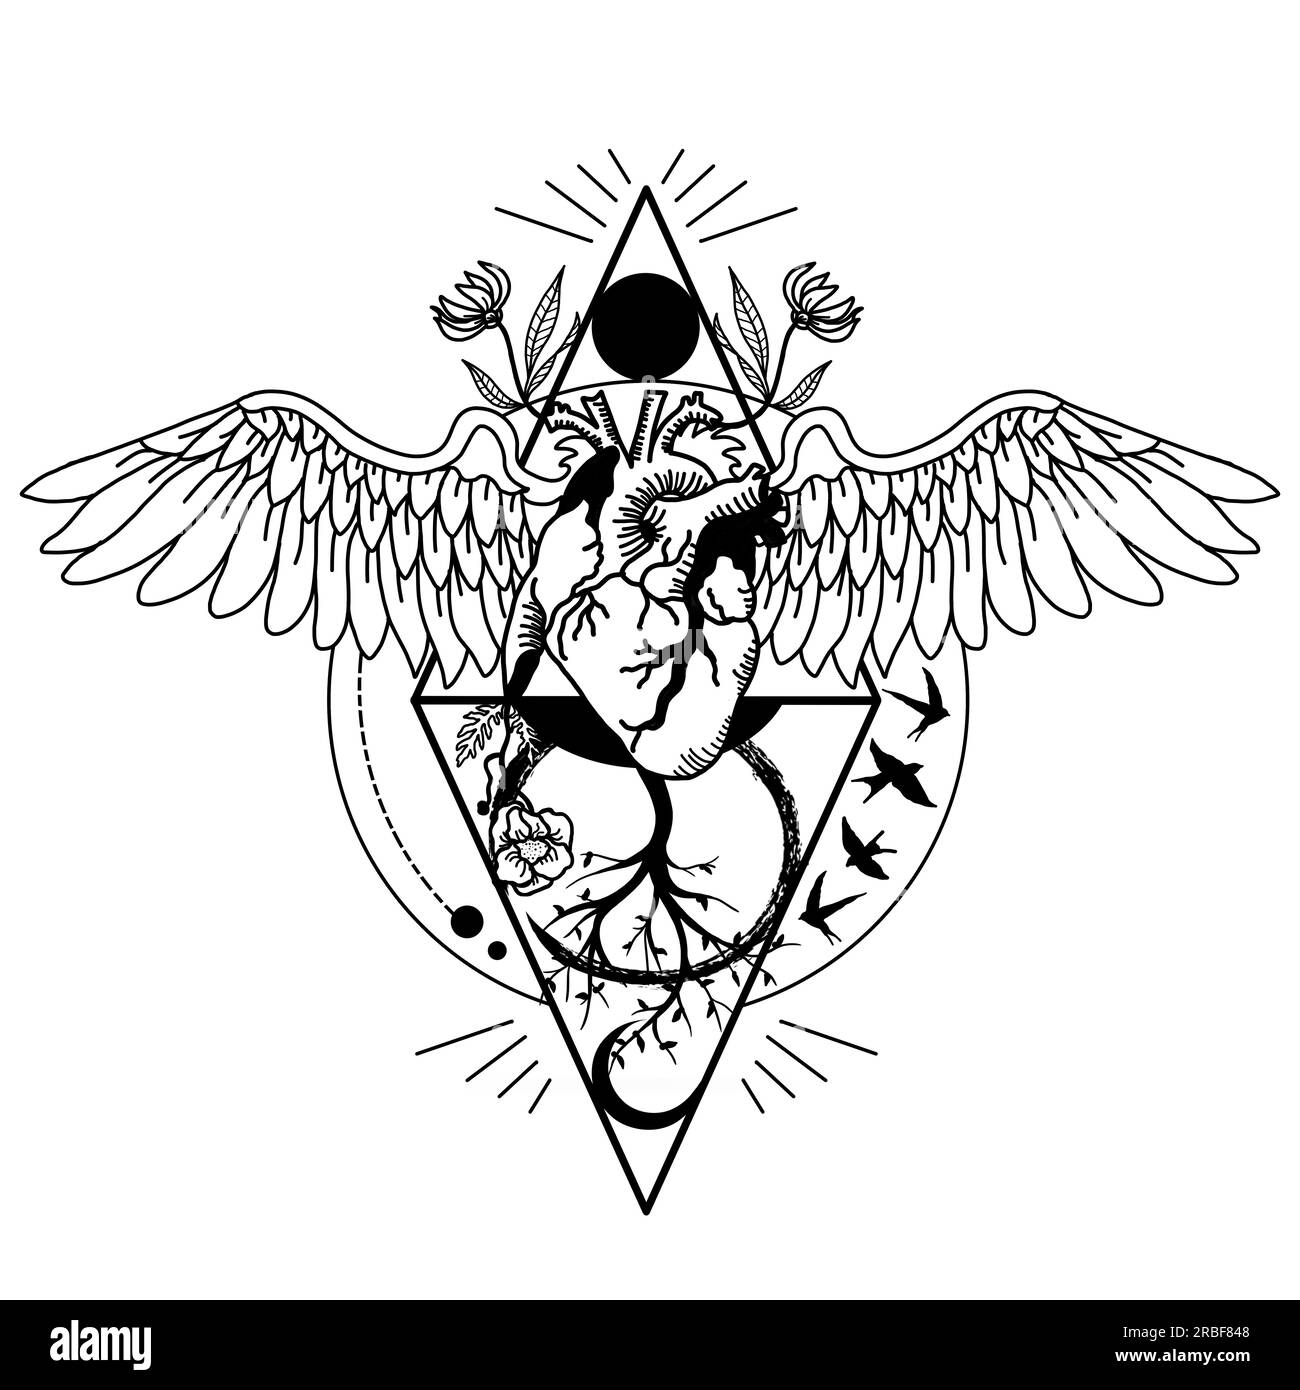 Tattoo design geometric Imágenes de stock en blanco y negro - Alamy